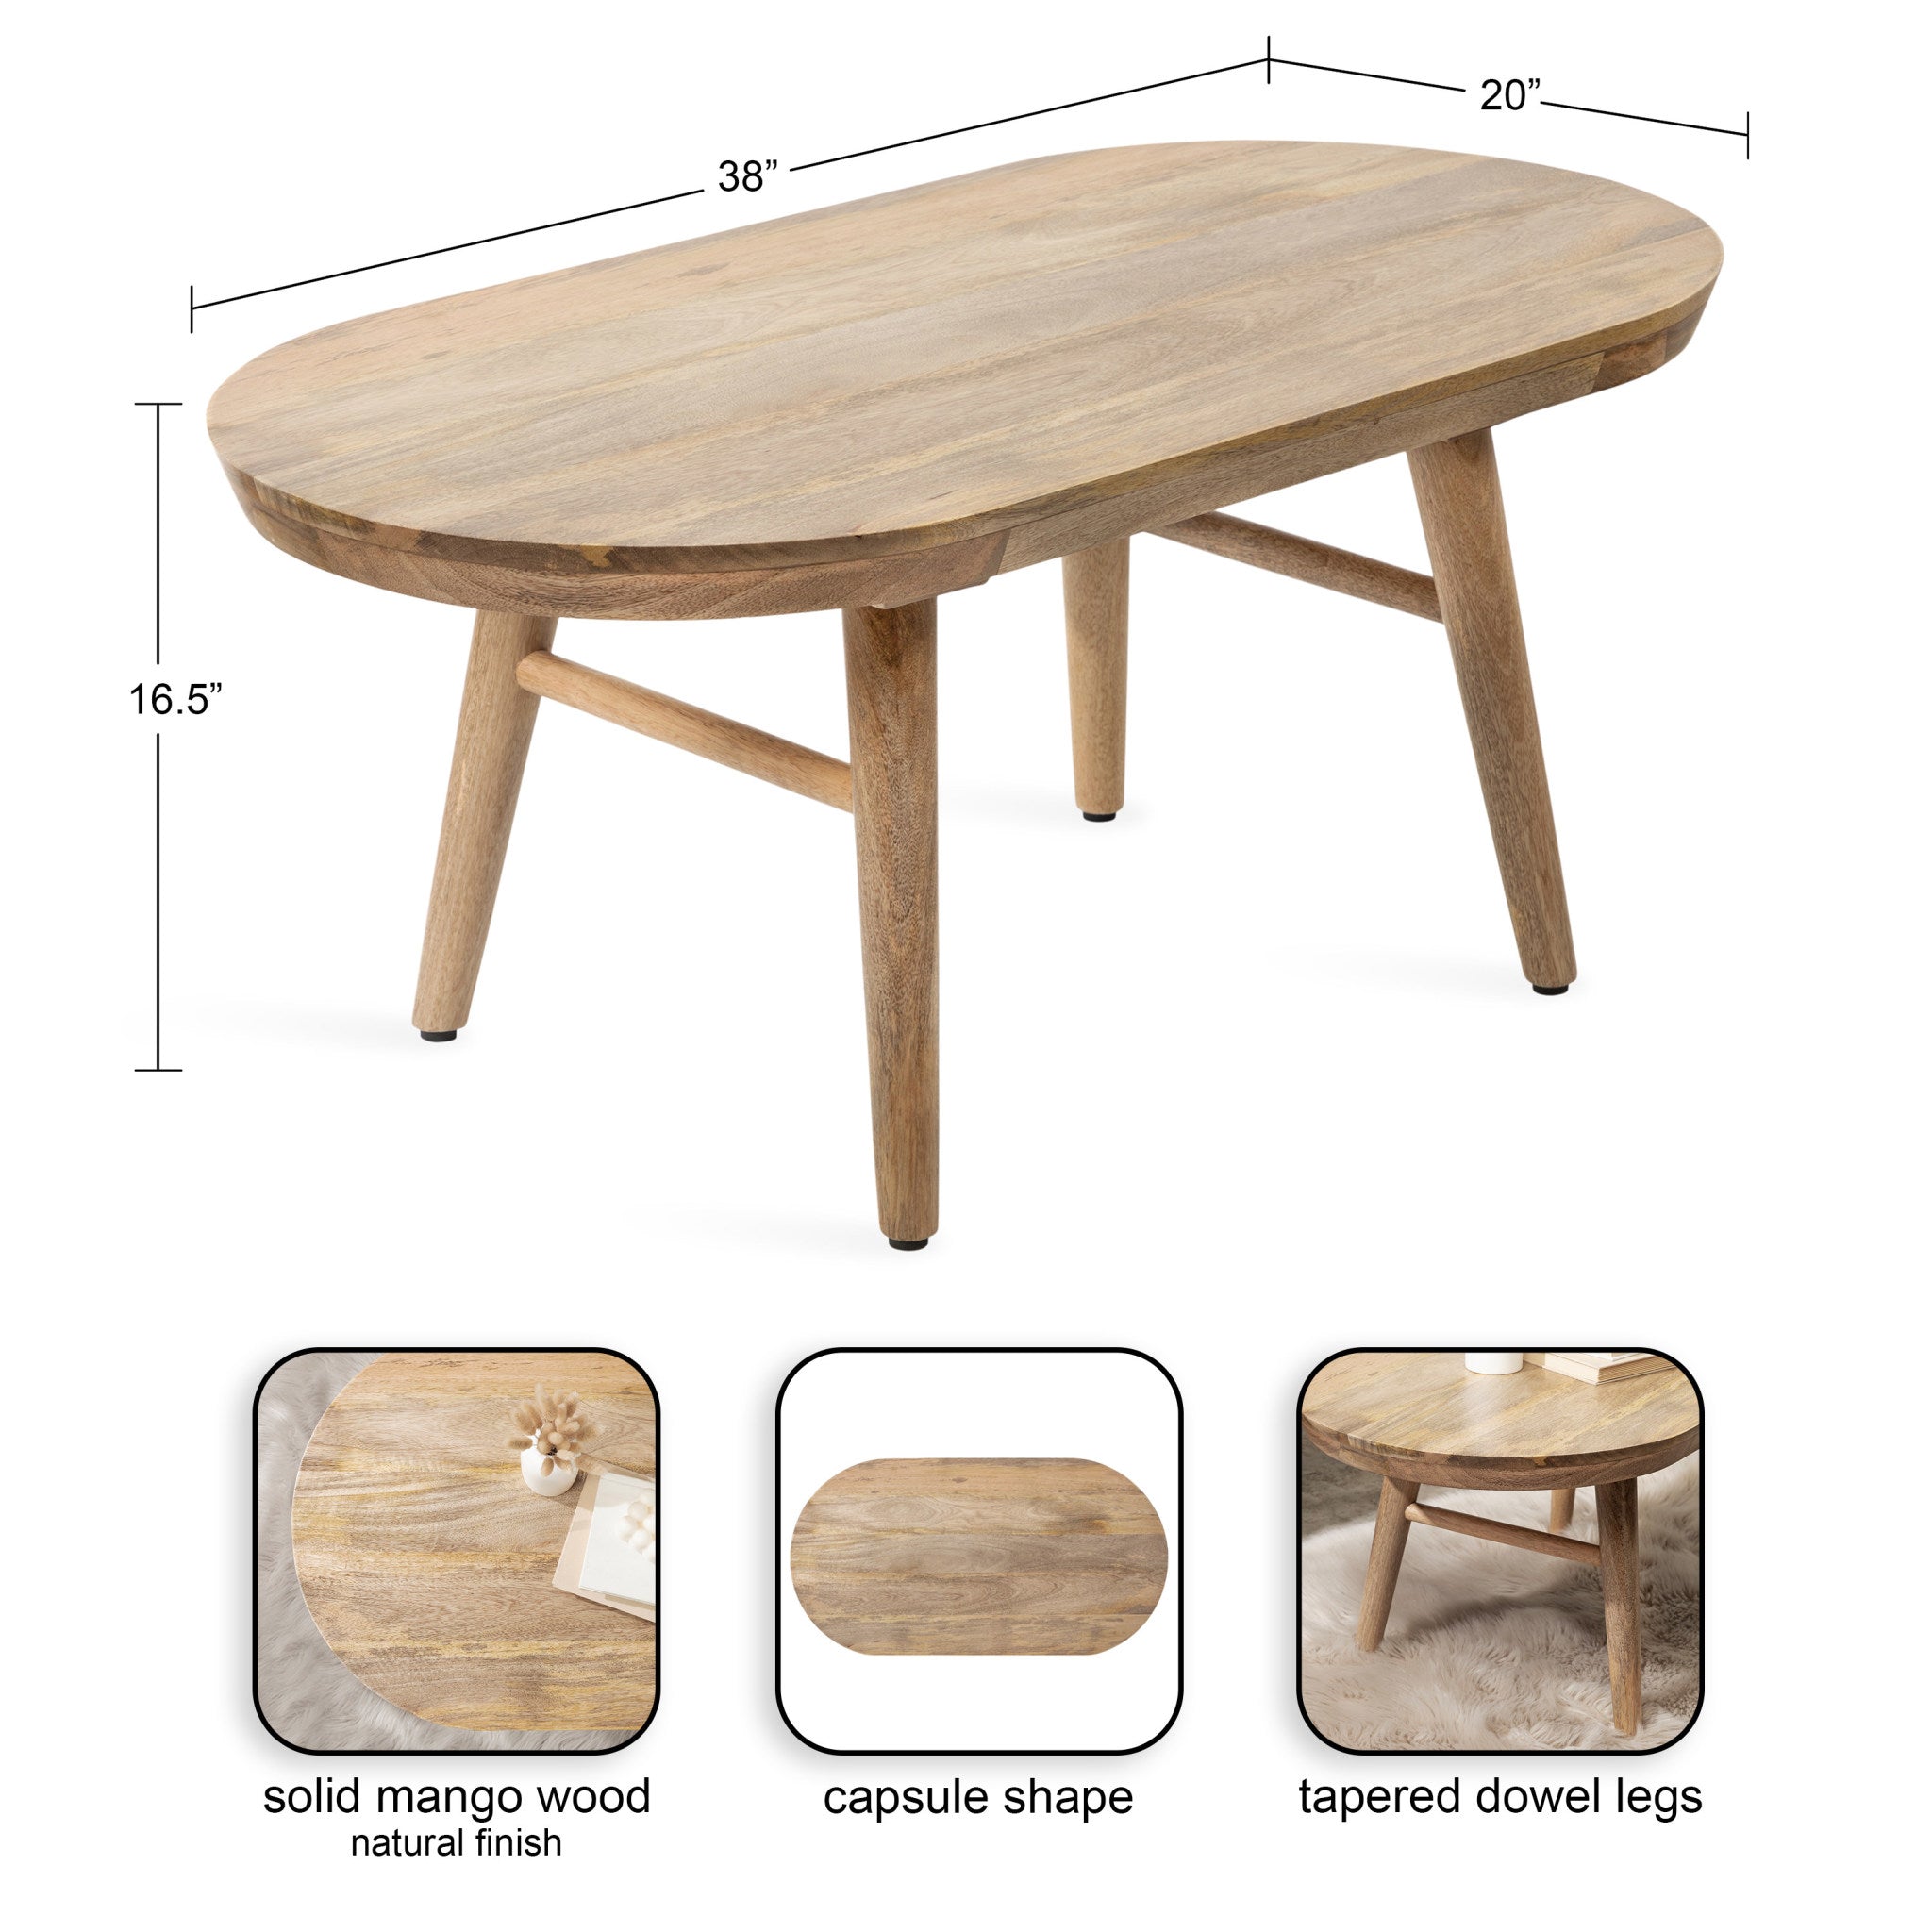 Conan Oval Wood Coffee Table